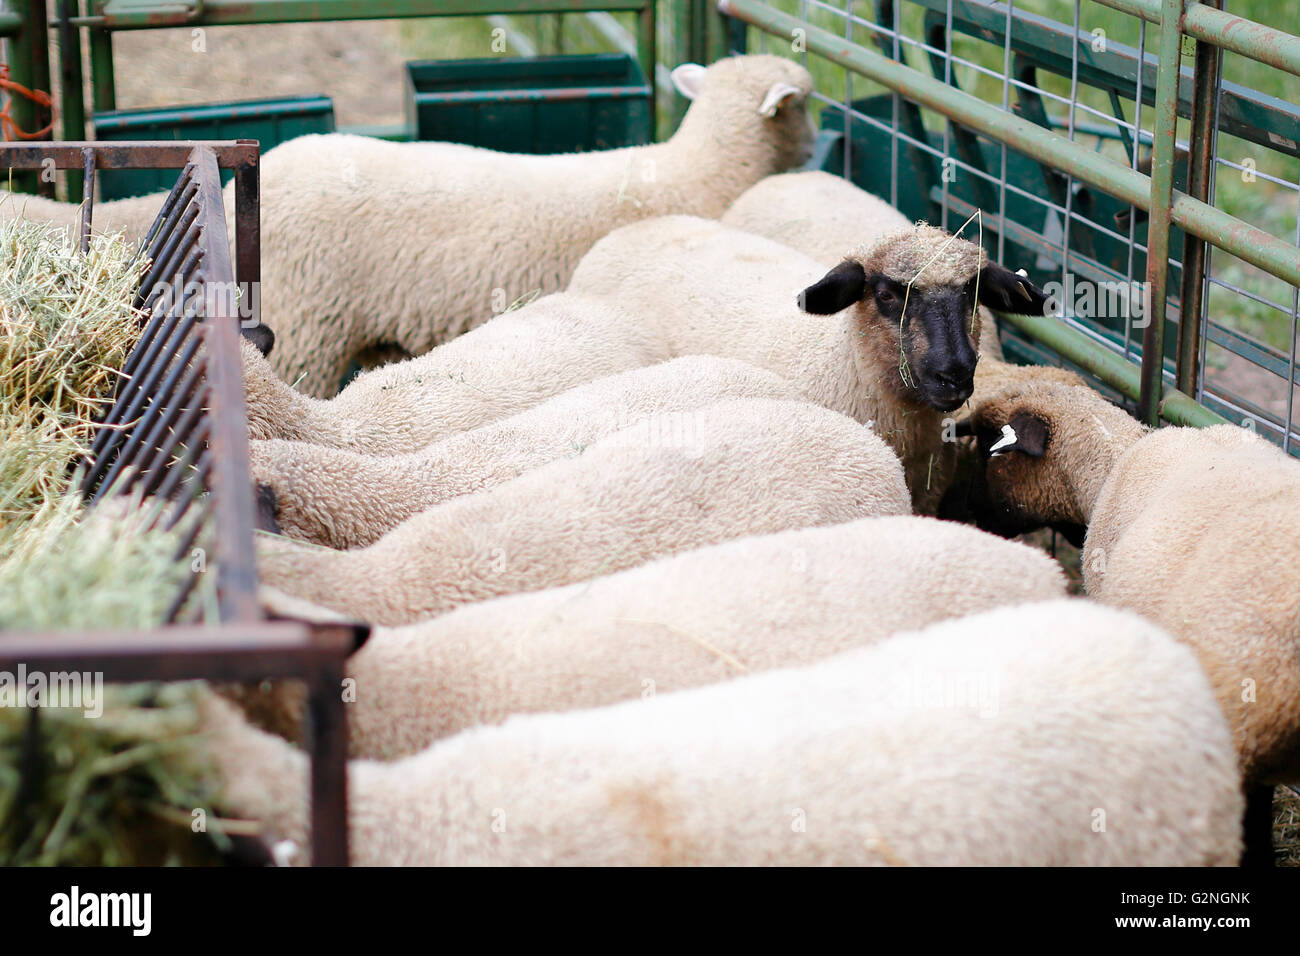 Sheep eating hay in the barnyard on the farm Stock Photo